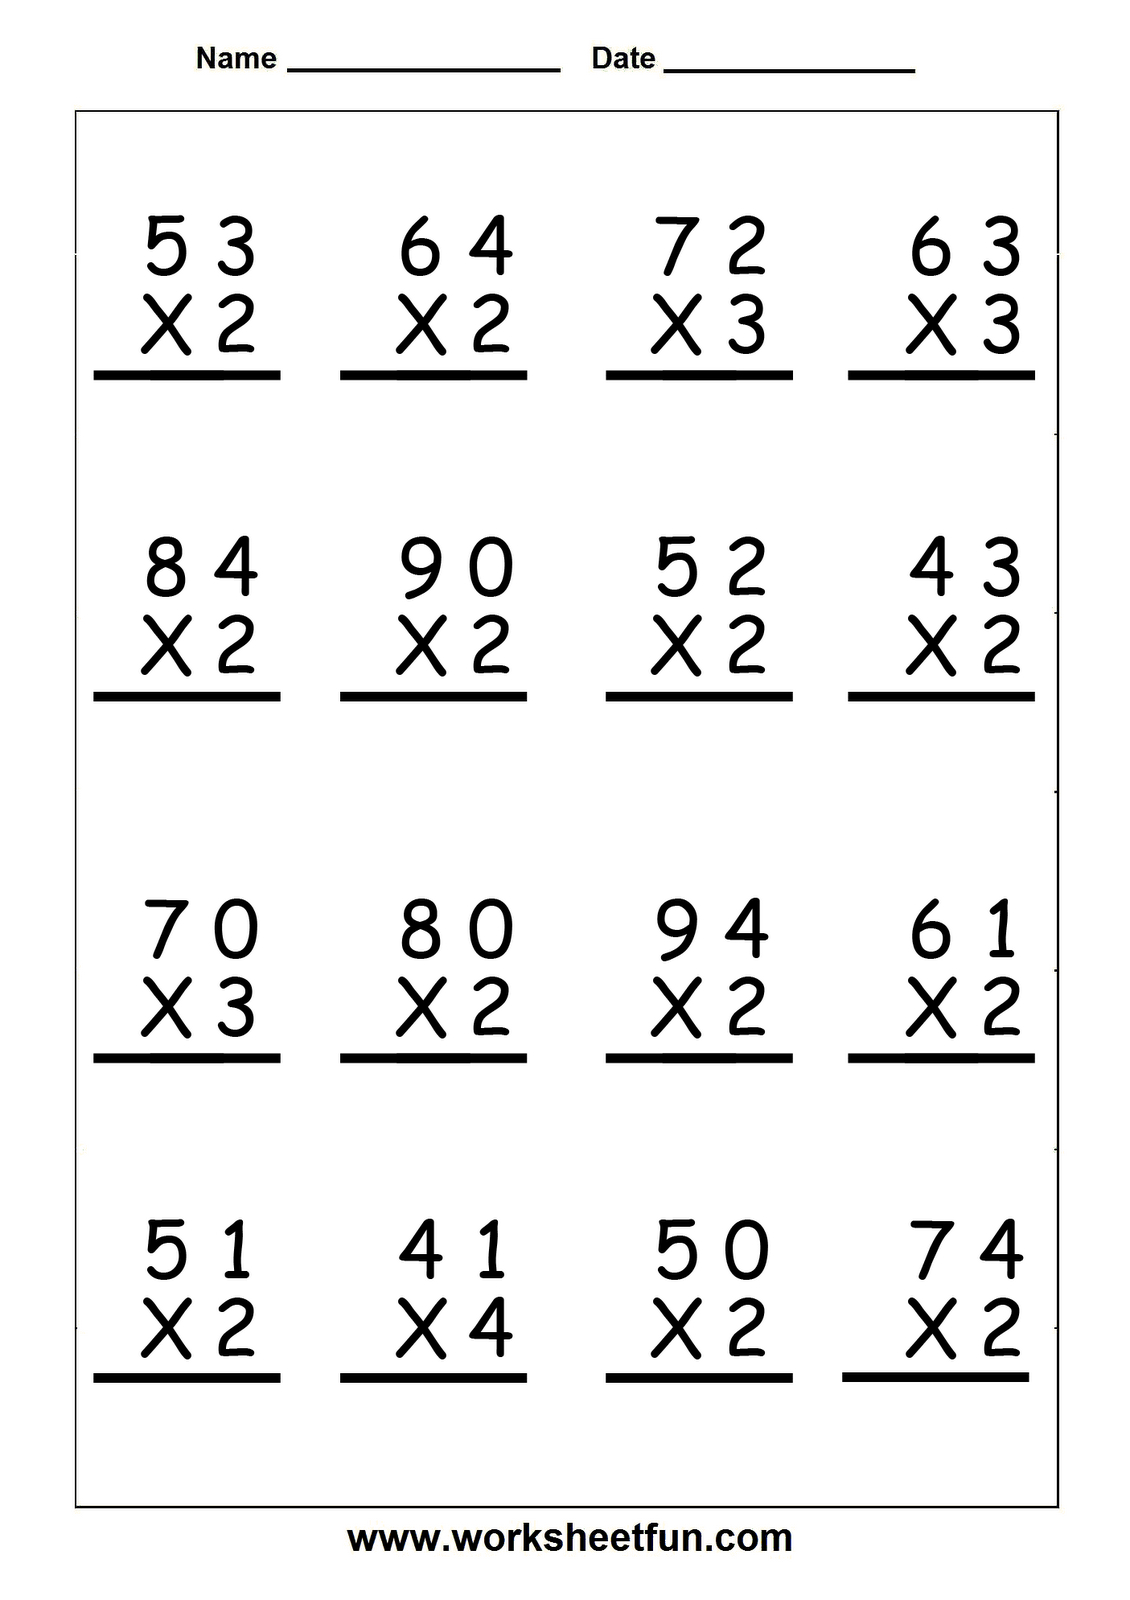 5th grade multiplication word problems worksheets pdf